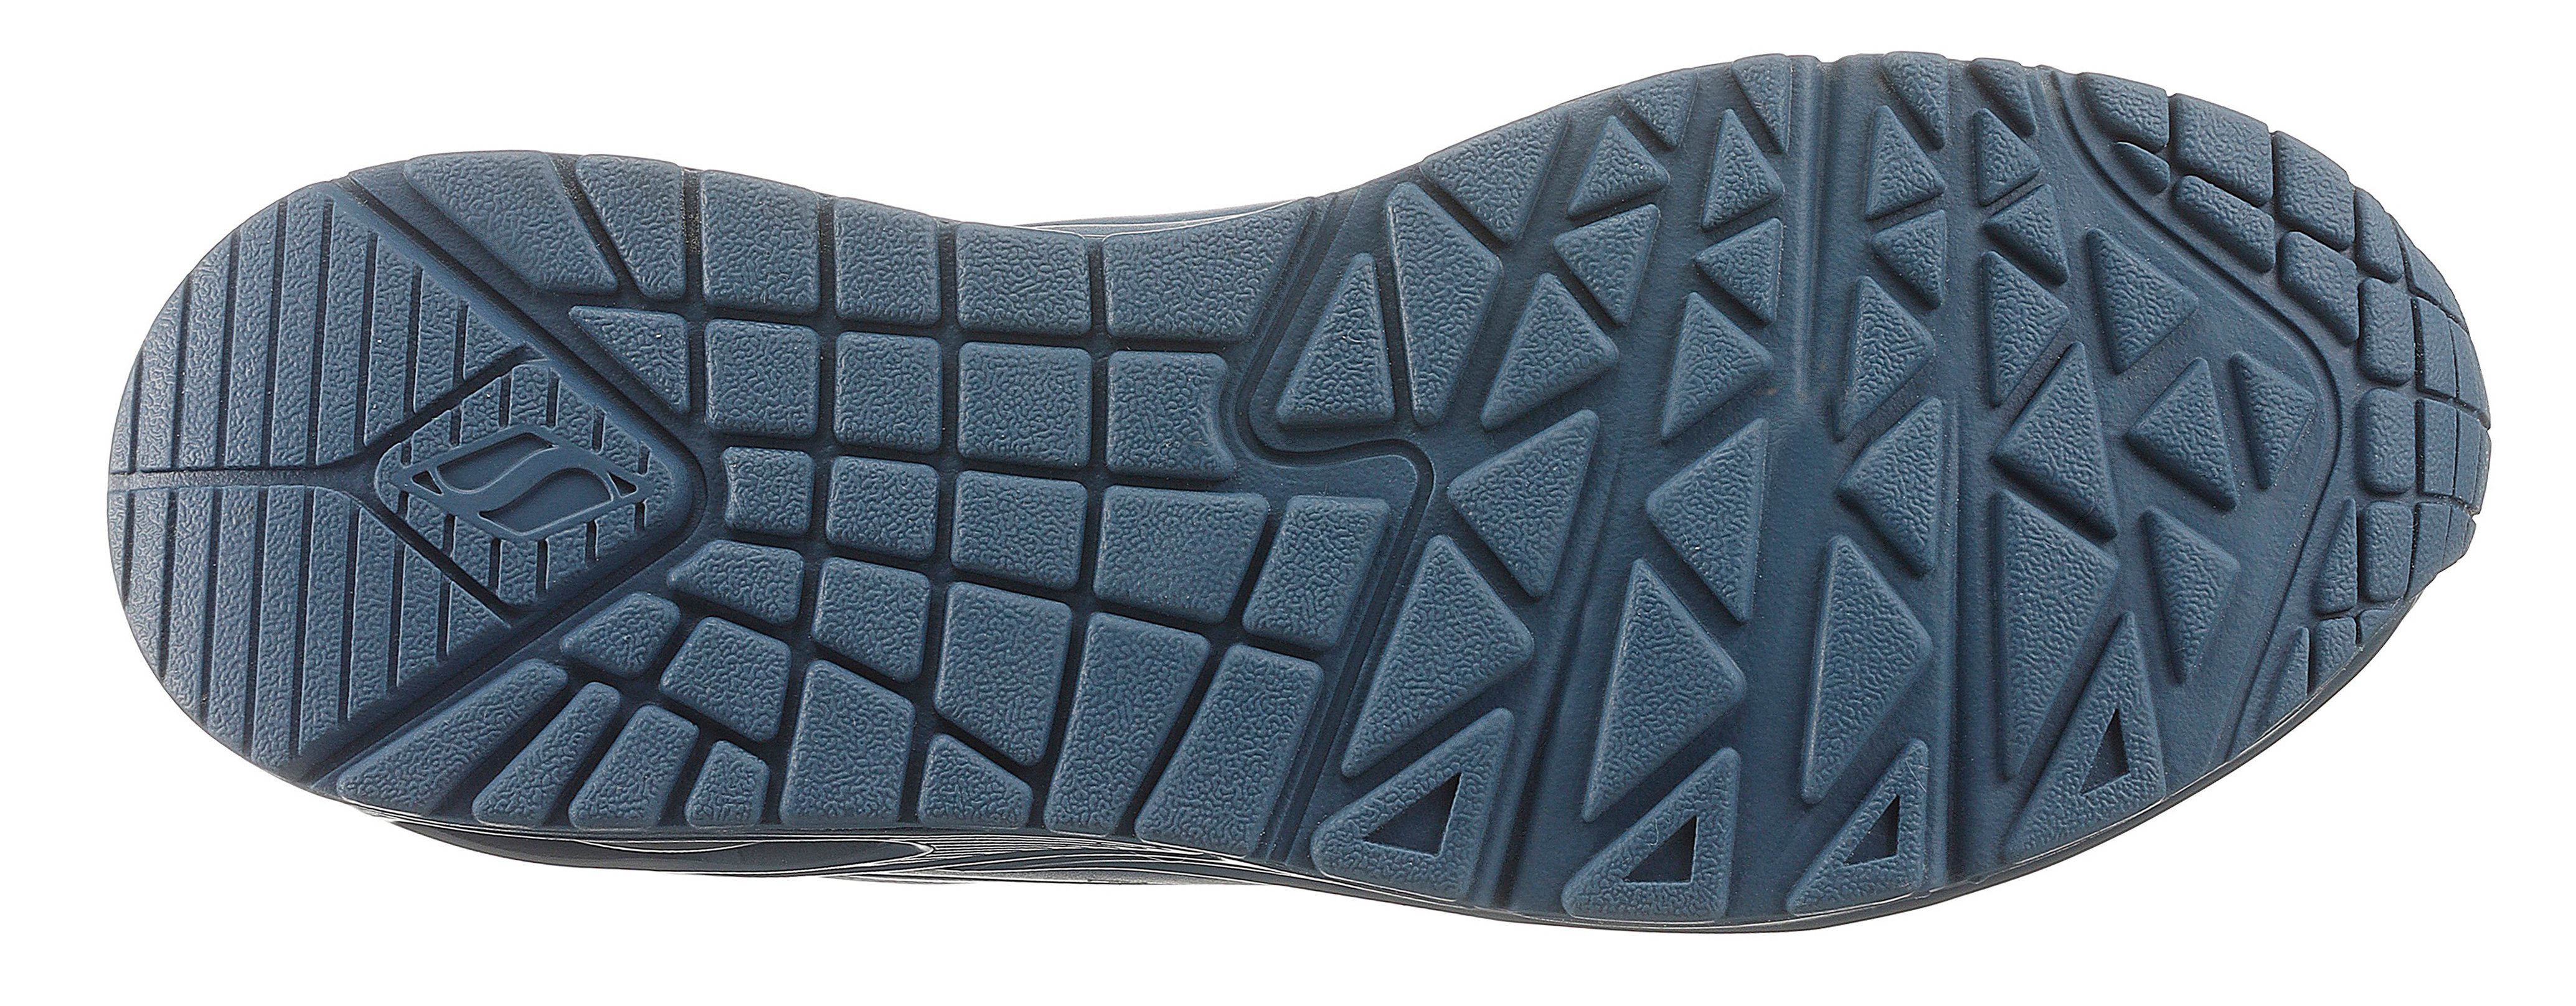 Skechers Uno - Stand on feiner mit Perforation Wedgesneaker Air blau